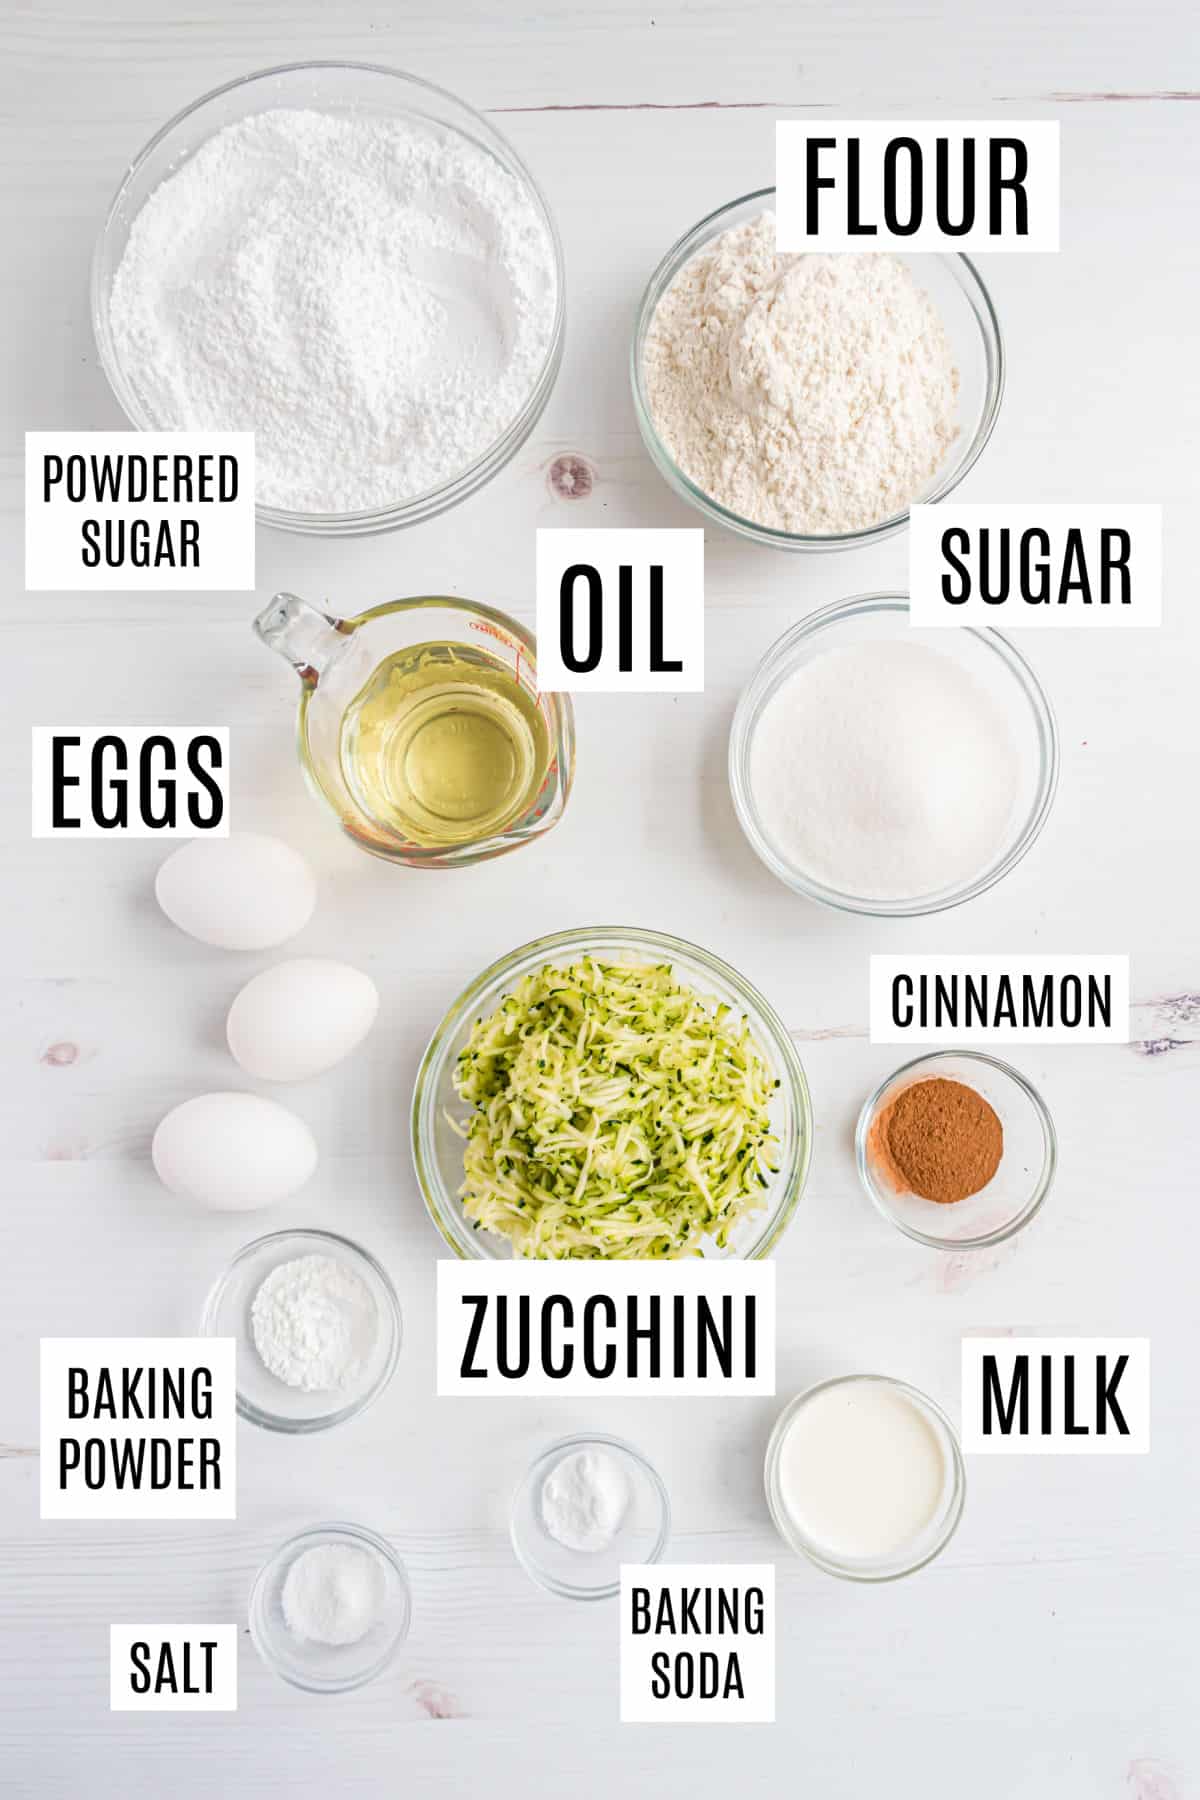 Ingredients needed to make zucchini bundt cake.